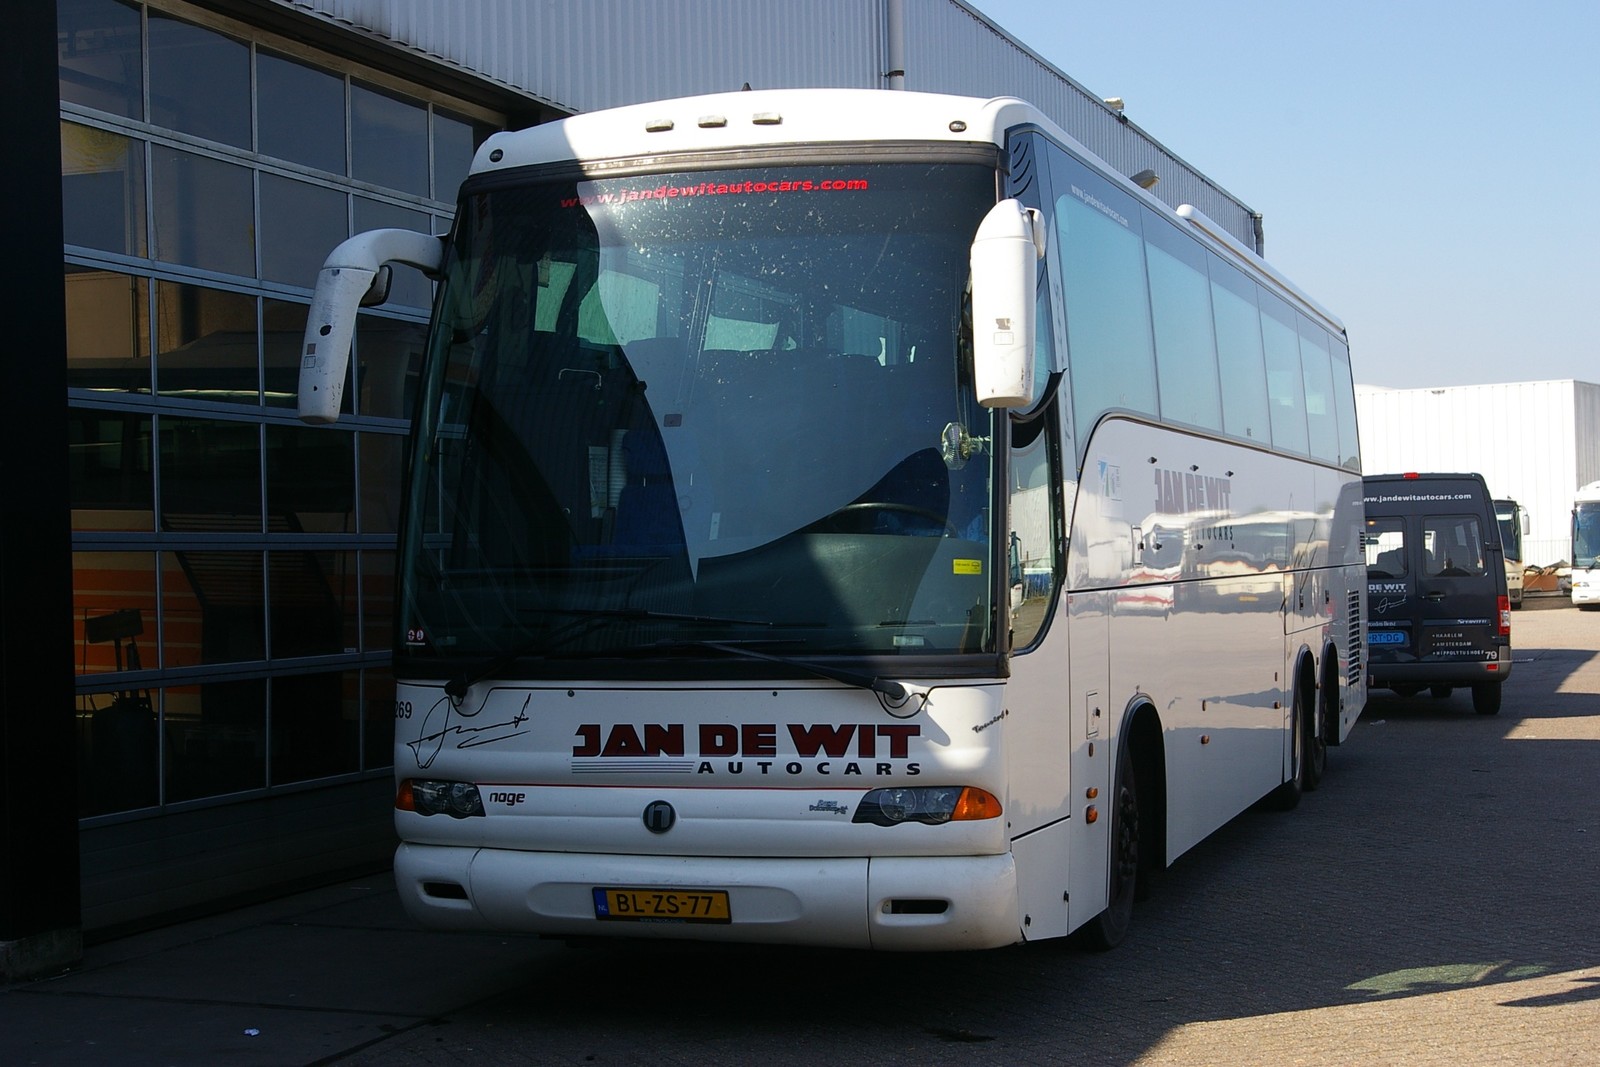 Foto van JdW Noge Touring 269